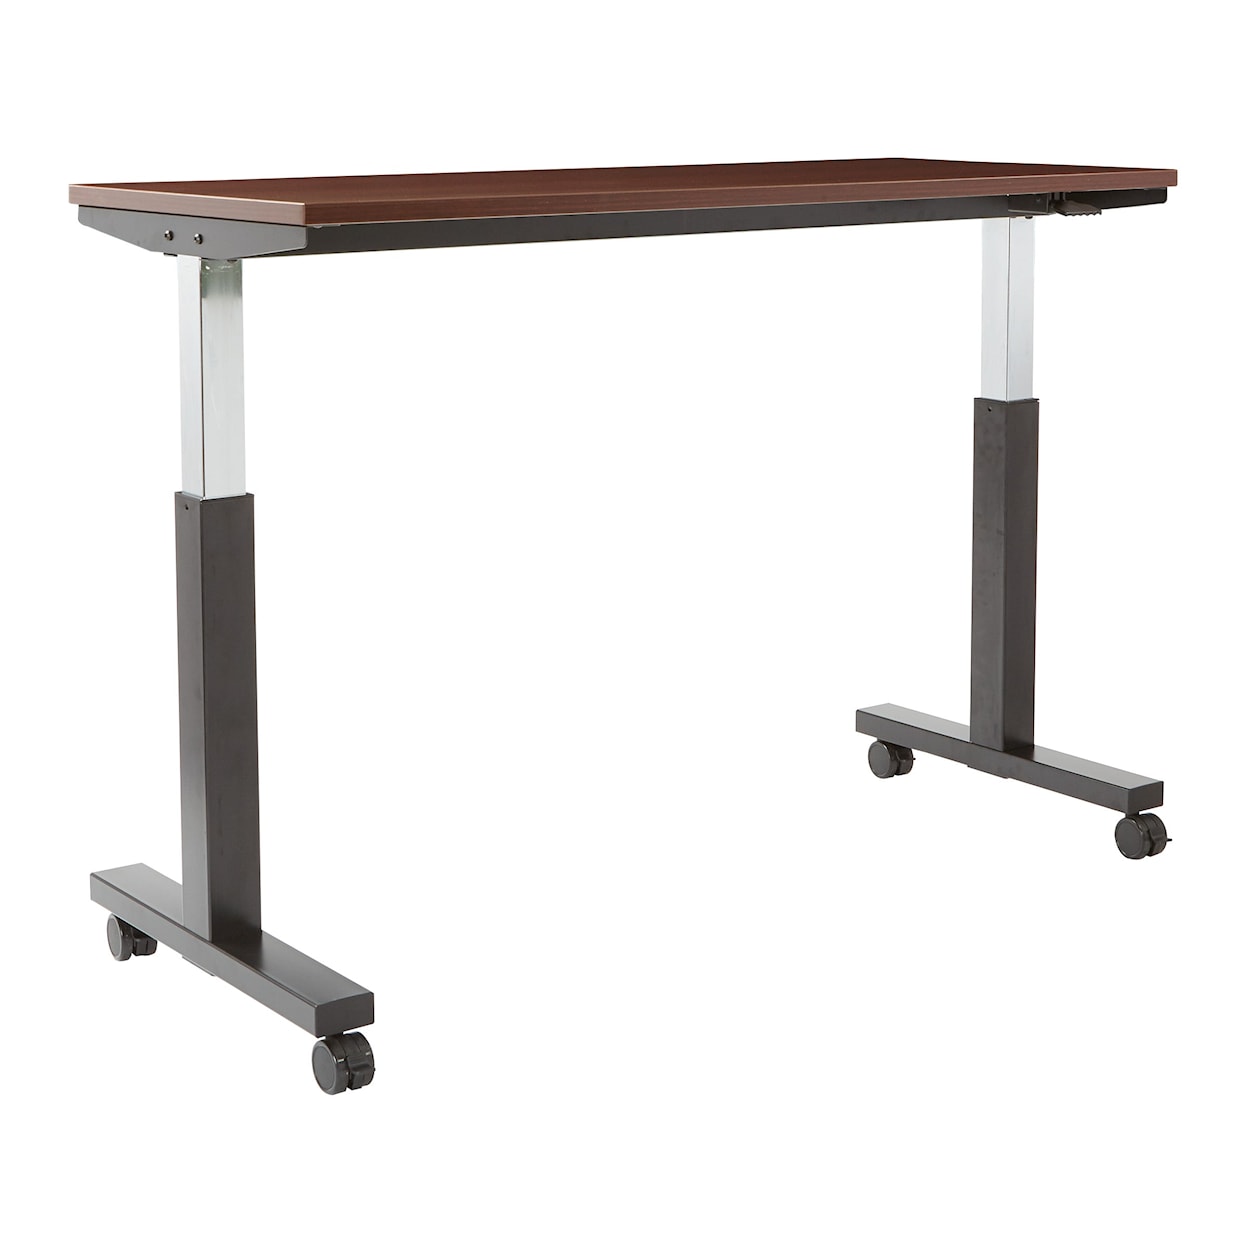 Office Star PHAT Adjustable Desk Table